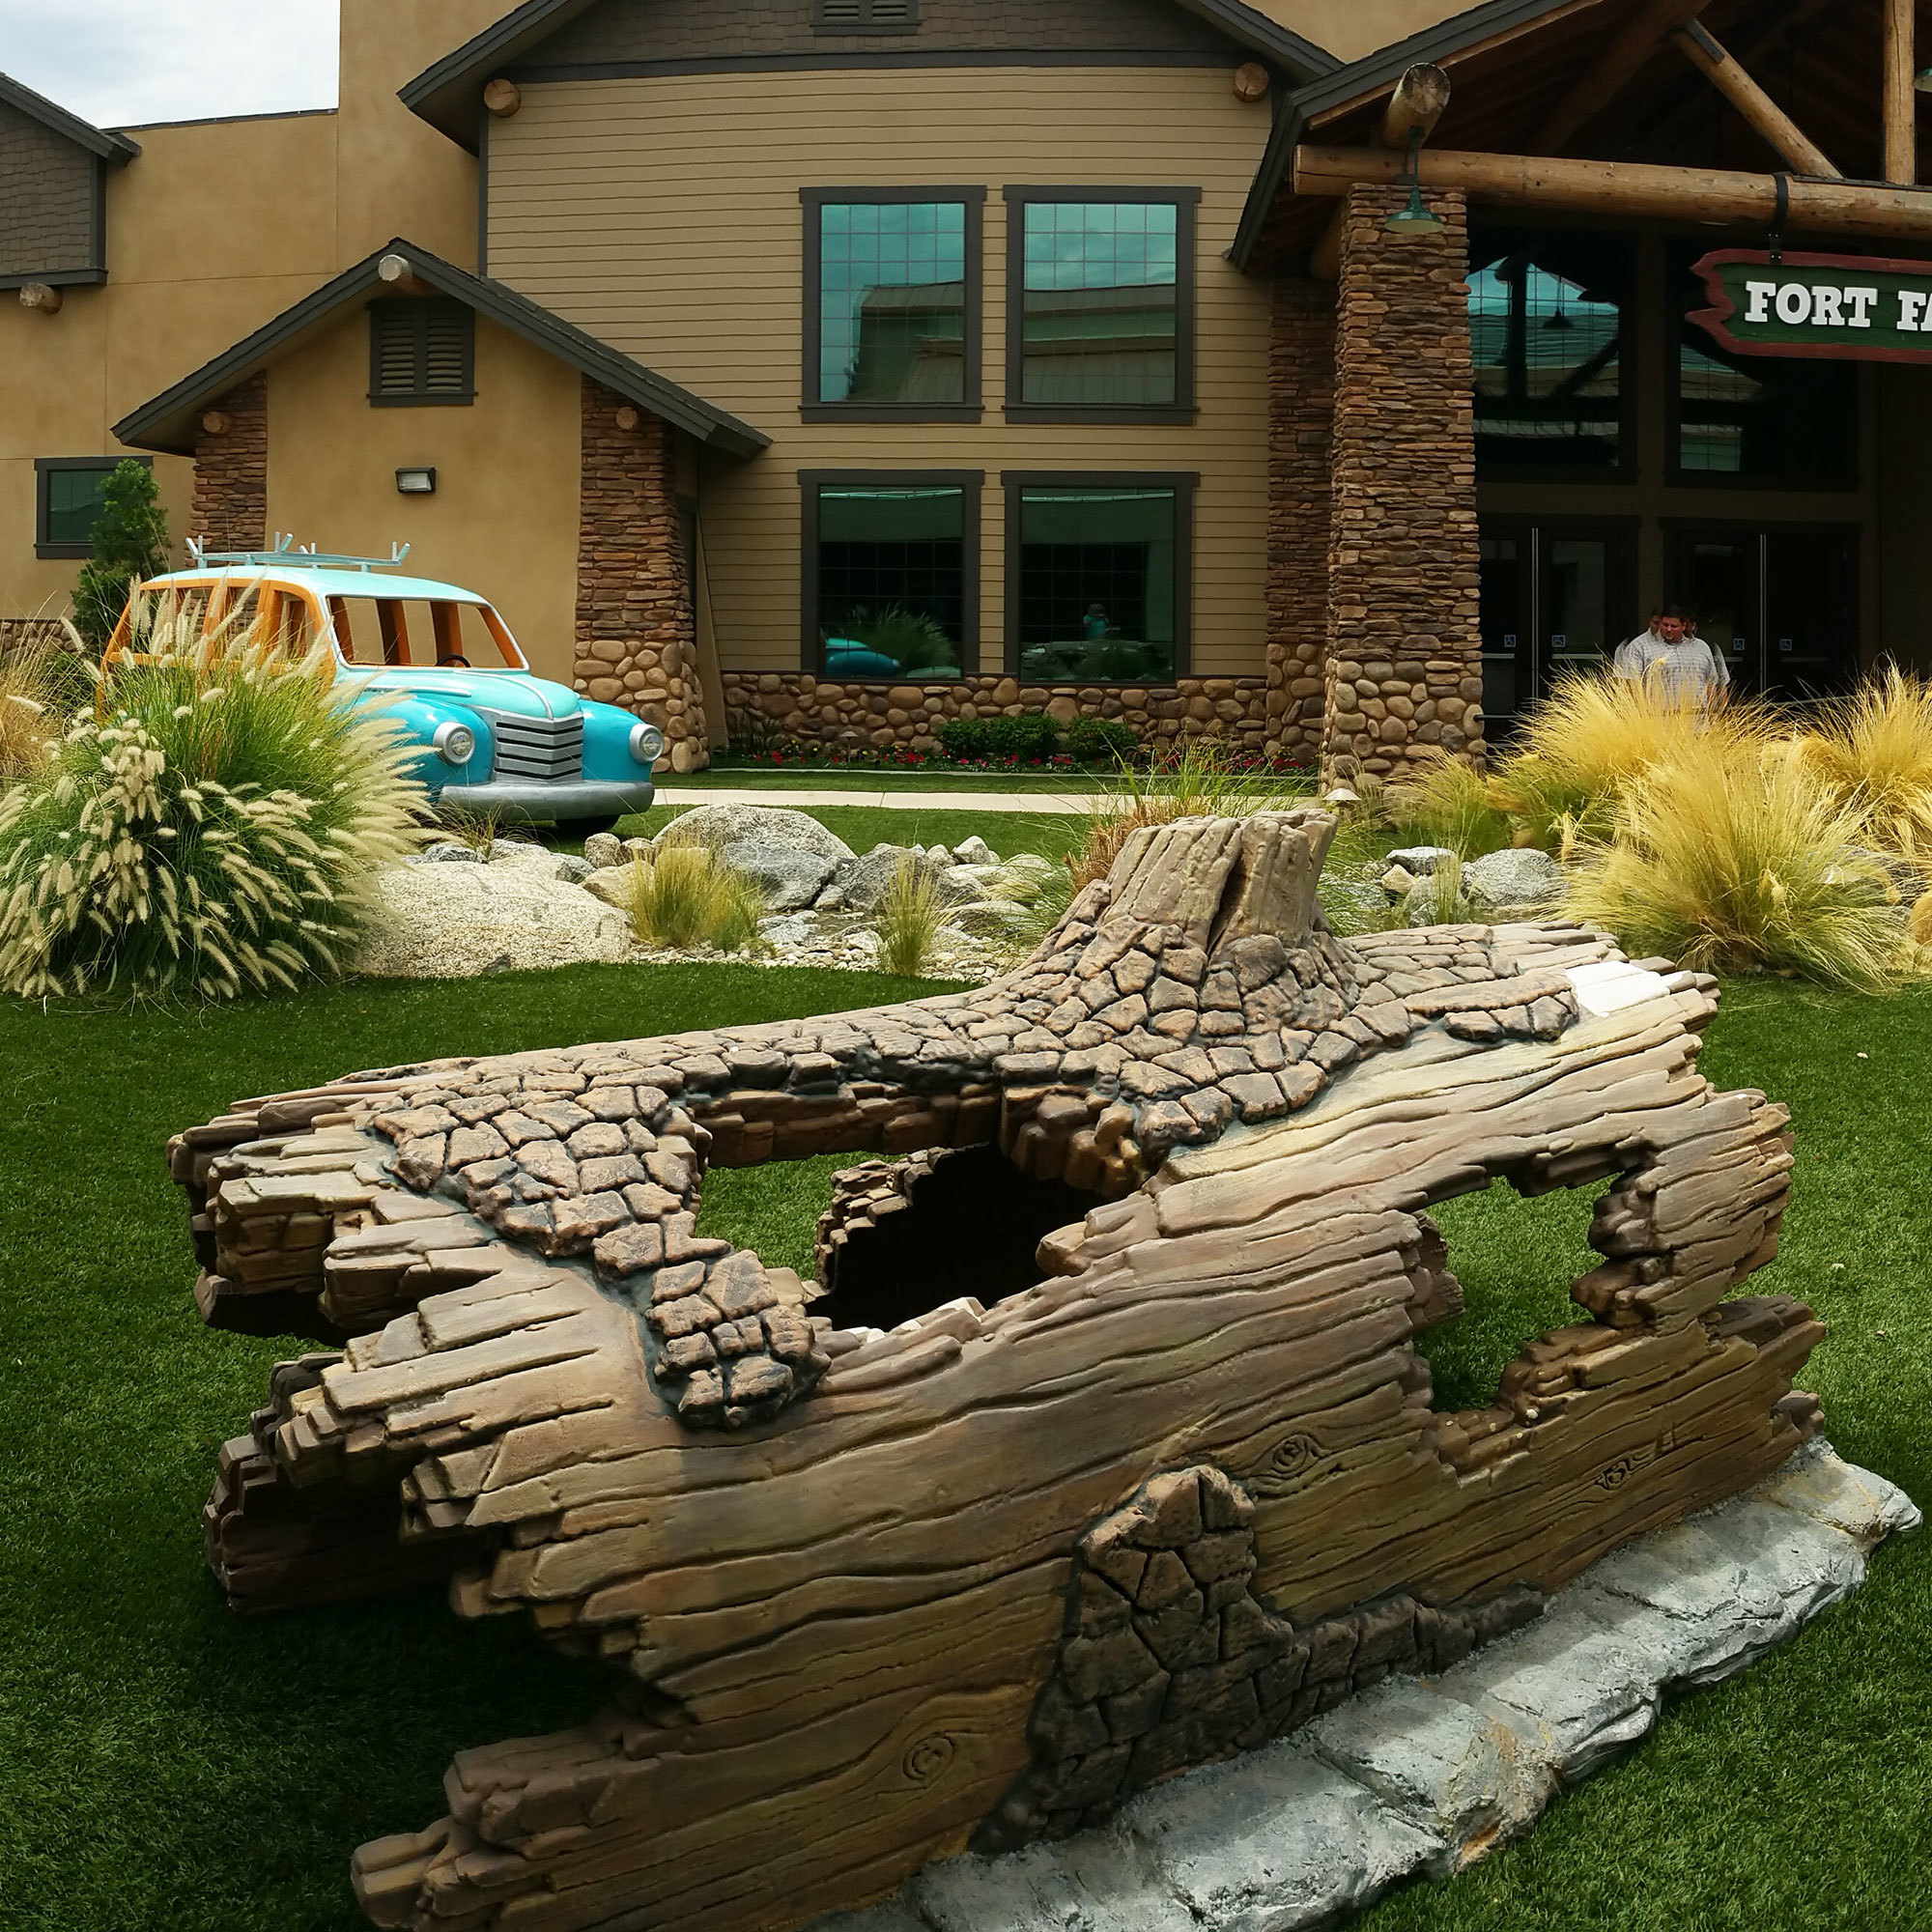 3D sculpted log crawl-thru play feature and 3D sculpted car outside Canyon Hills Church